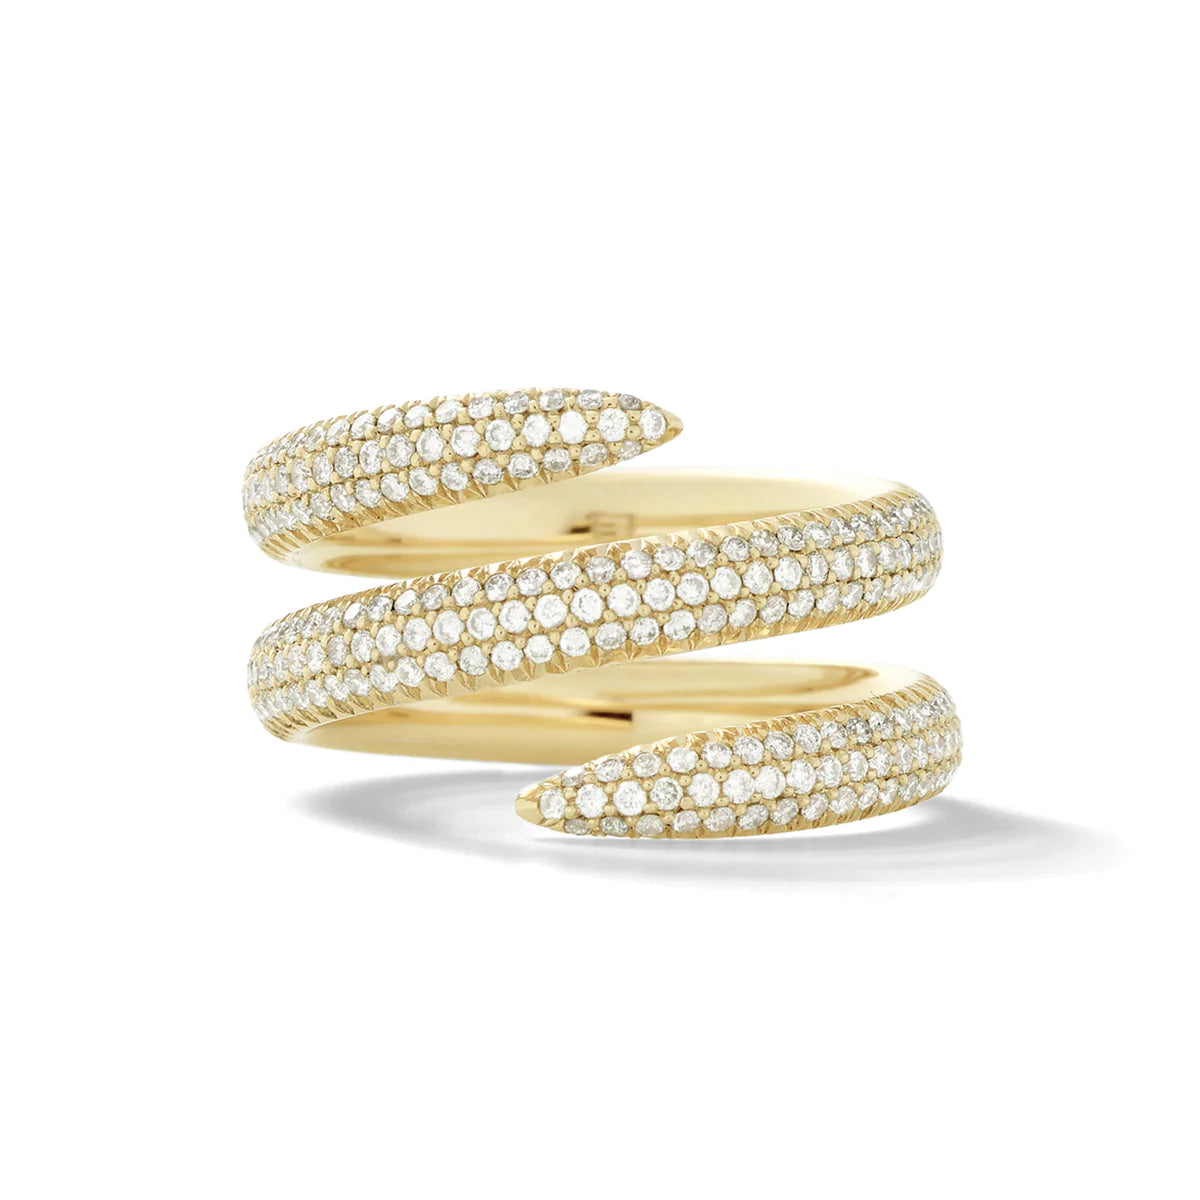 Eva Fehren Pave Snake Ring in 18K Yellow Gold with White Diamonds